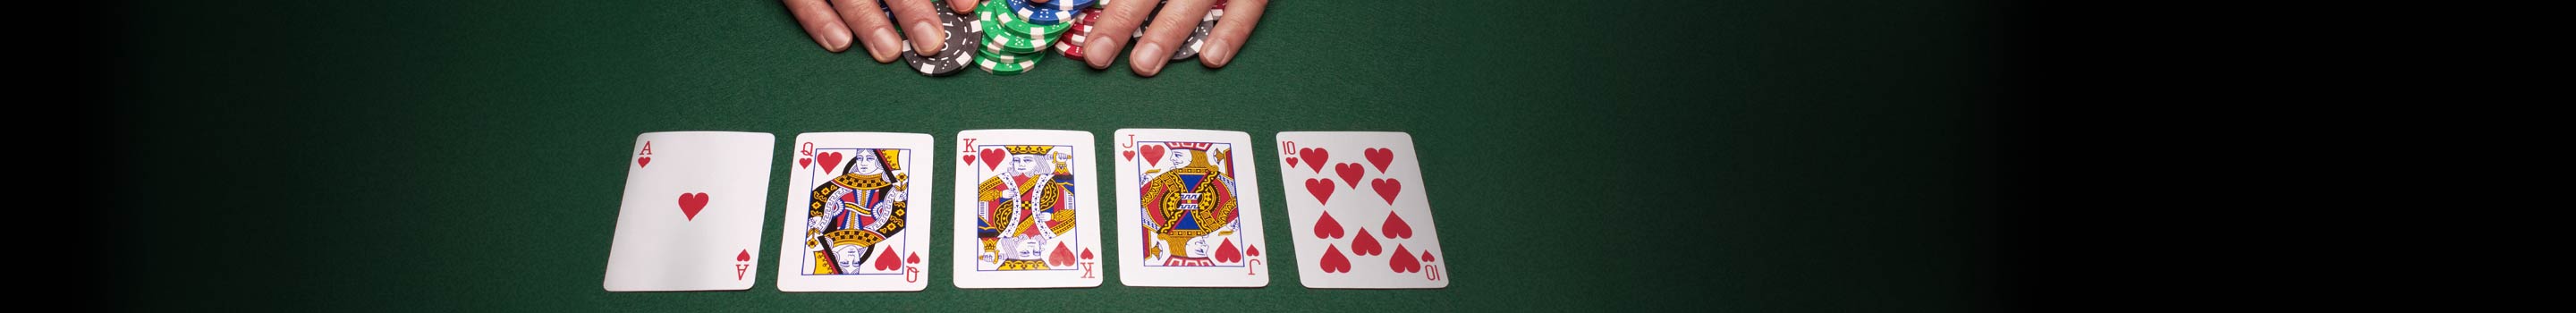 Rangfolge der Poker Hände